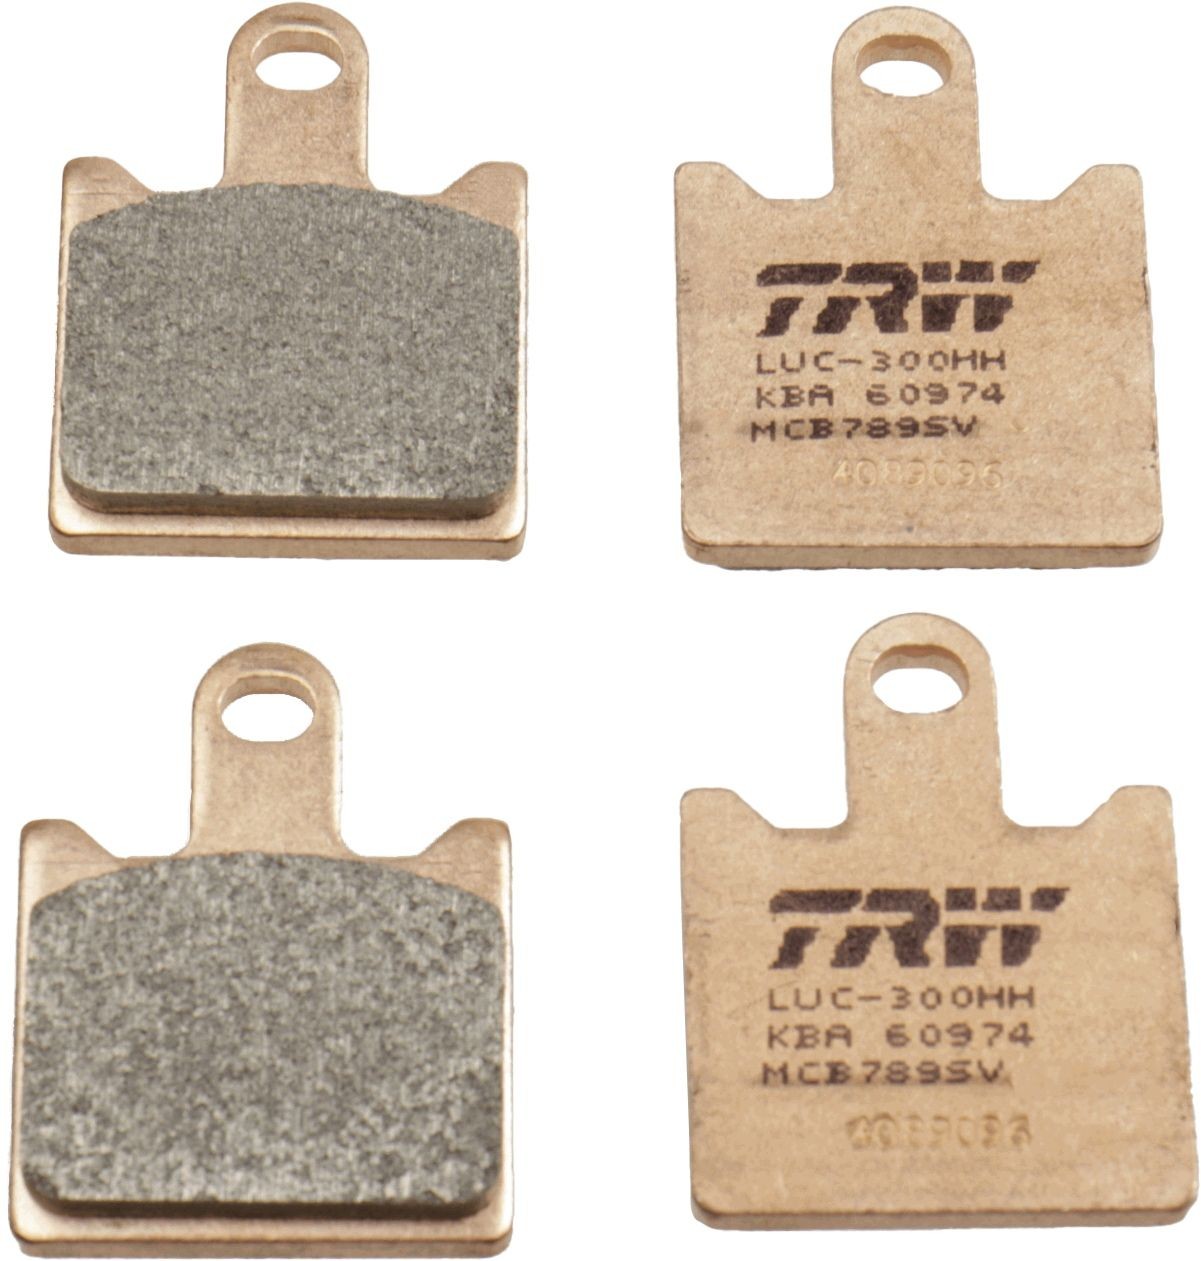 TRW Brake pad kit MCB789SV